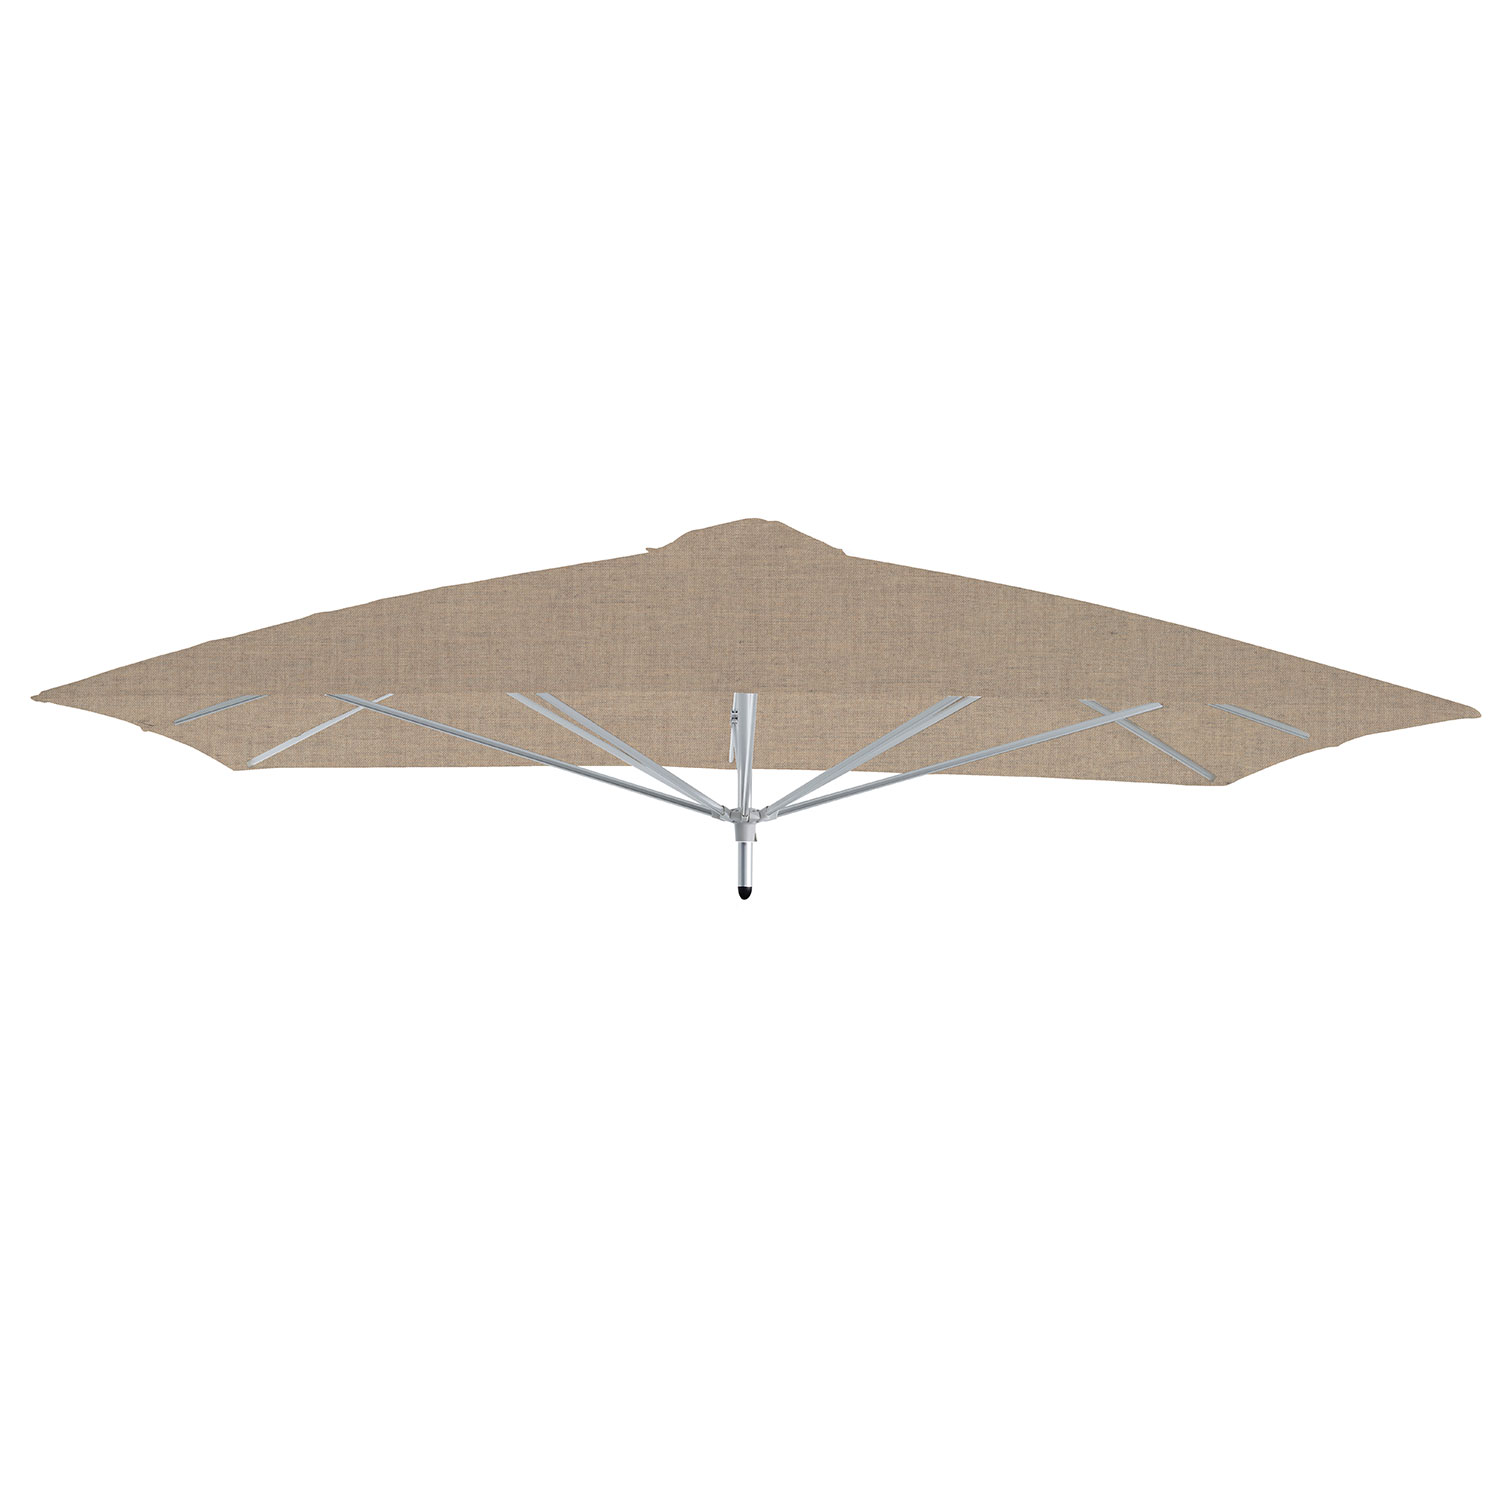 Paraflex Neo parasolkap 230x230cm - Sunbrella (Sand)